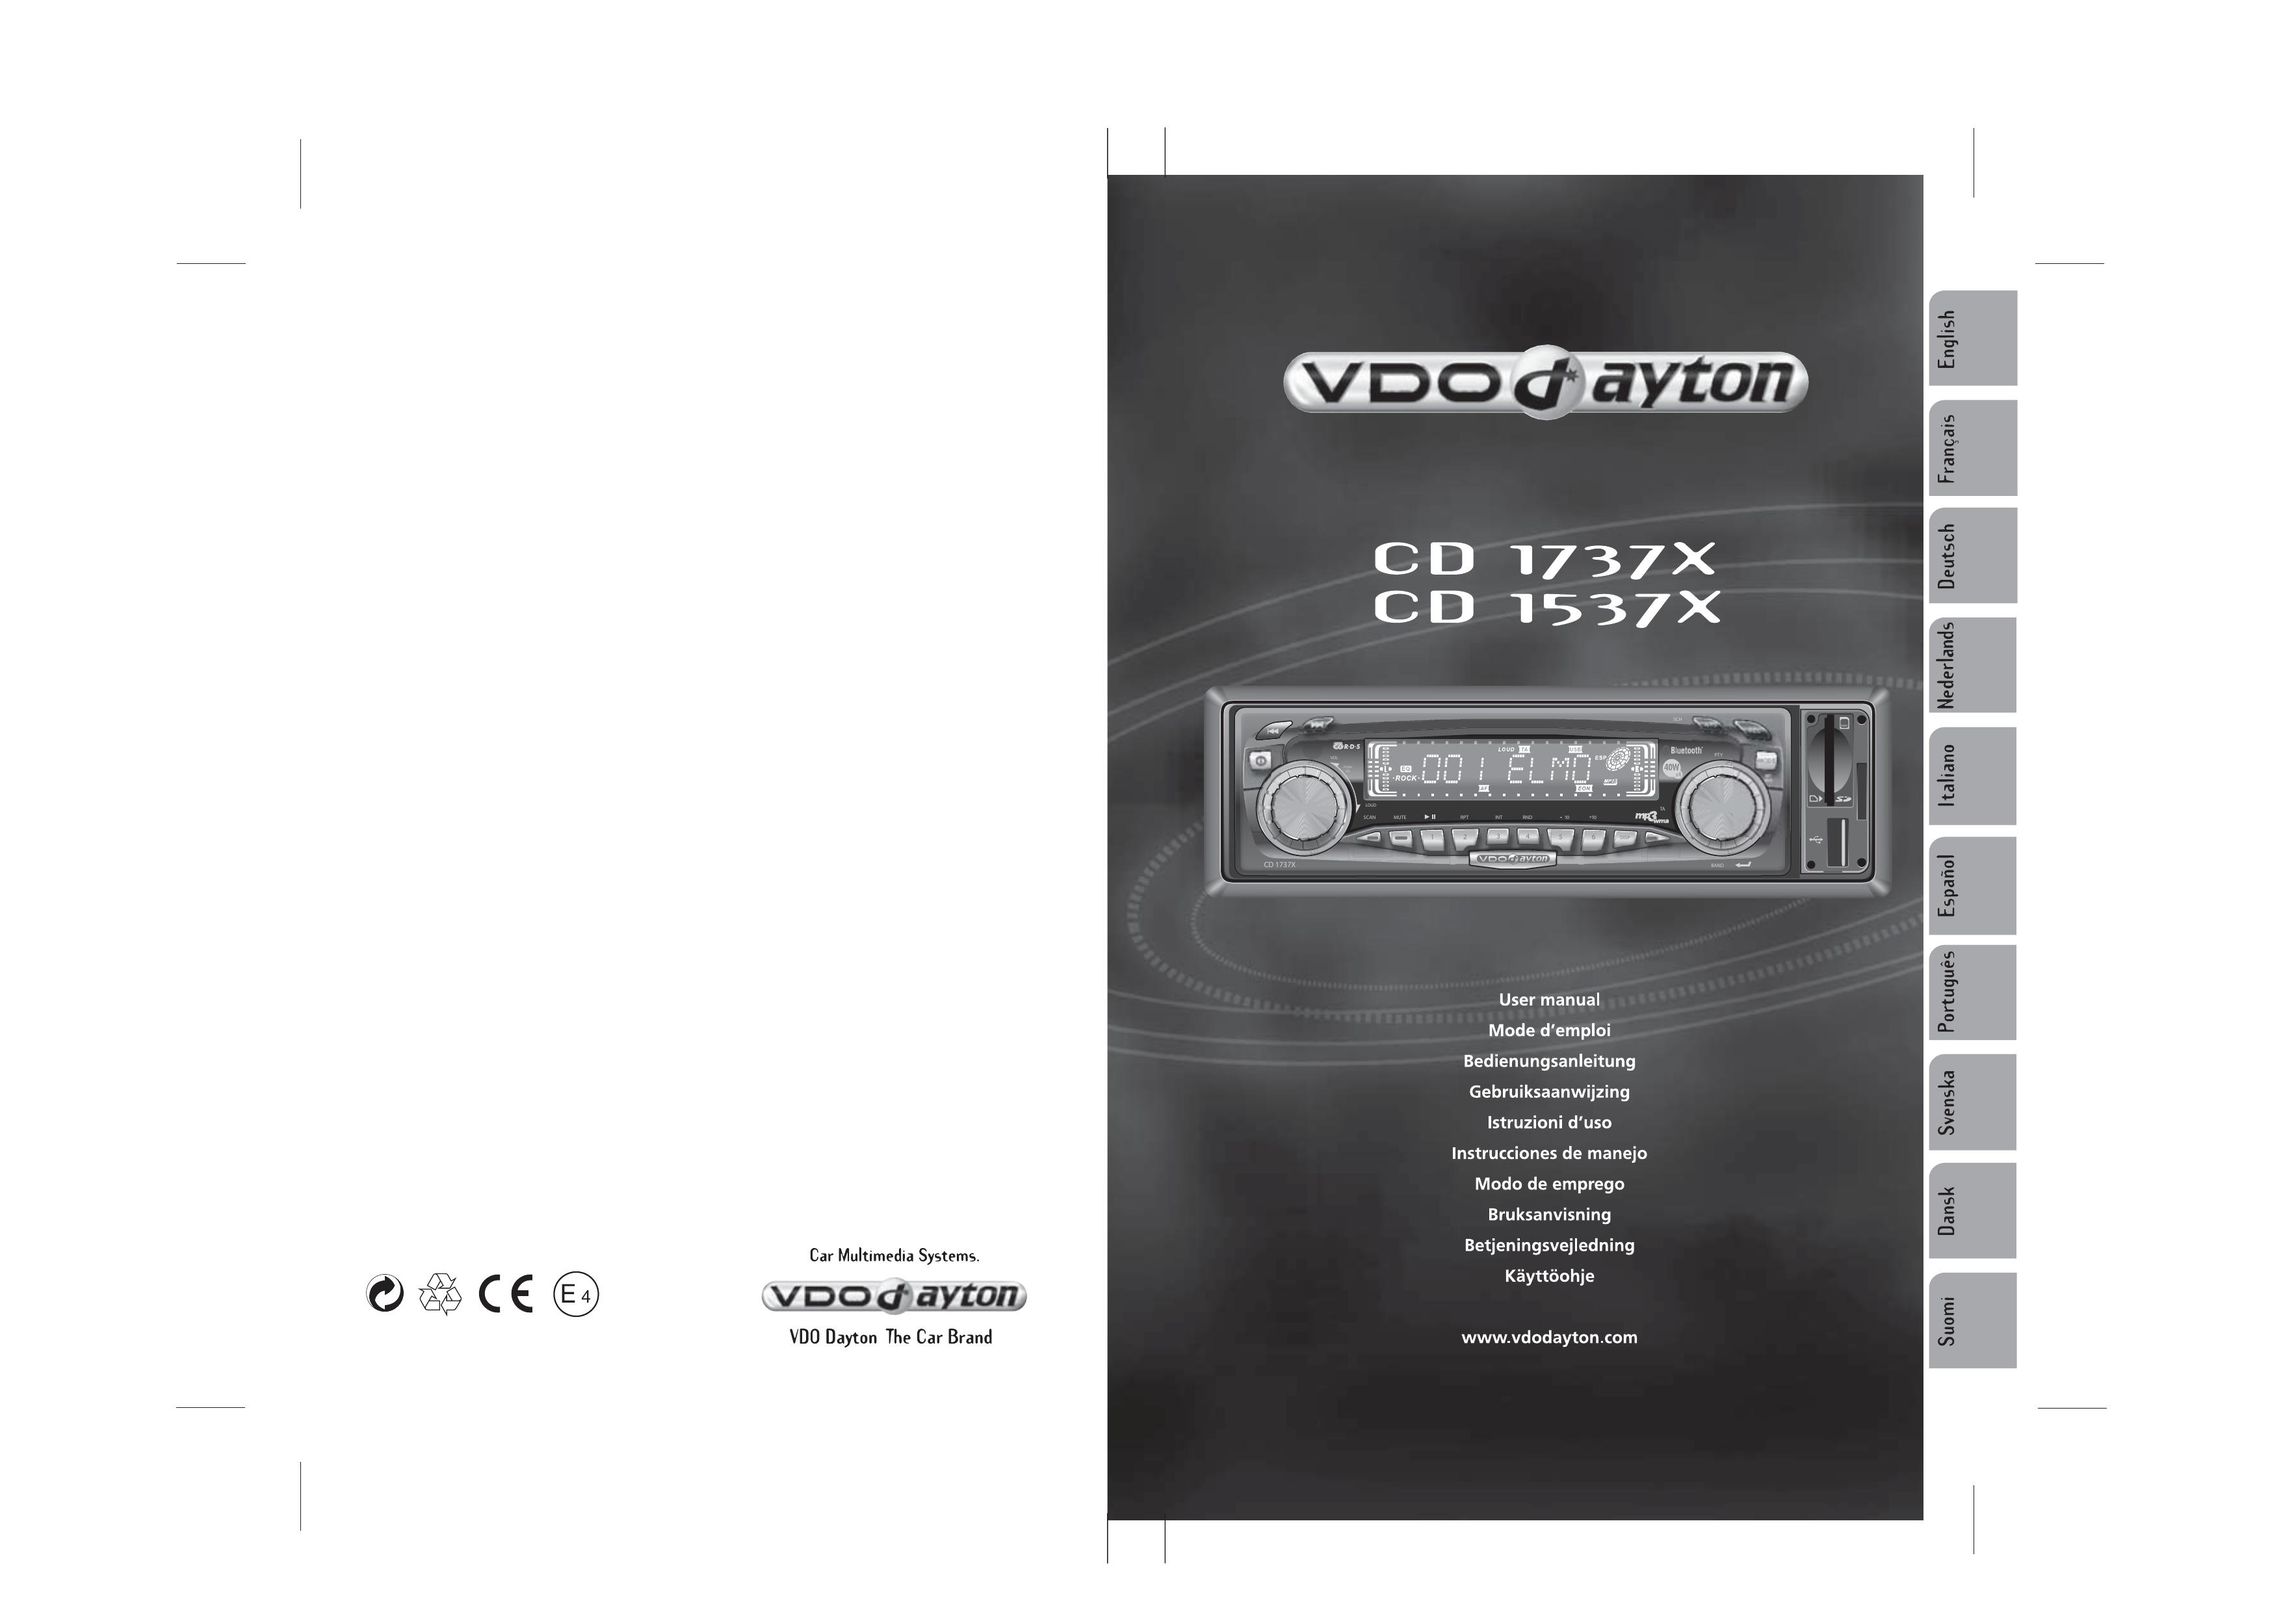 VDO Dayton CD 1737x Car Stereo System User Manual